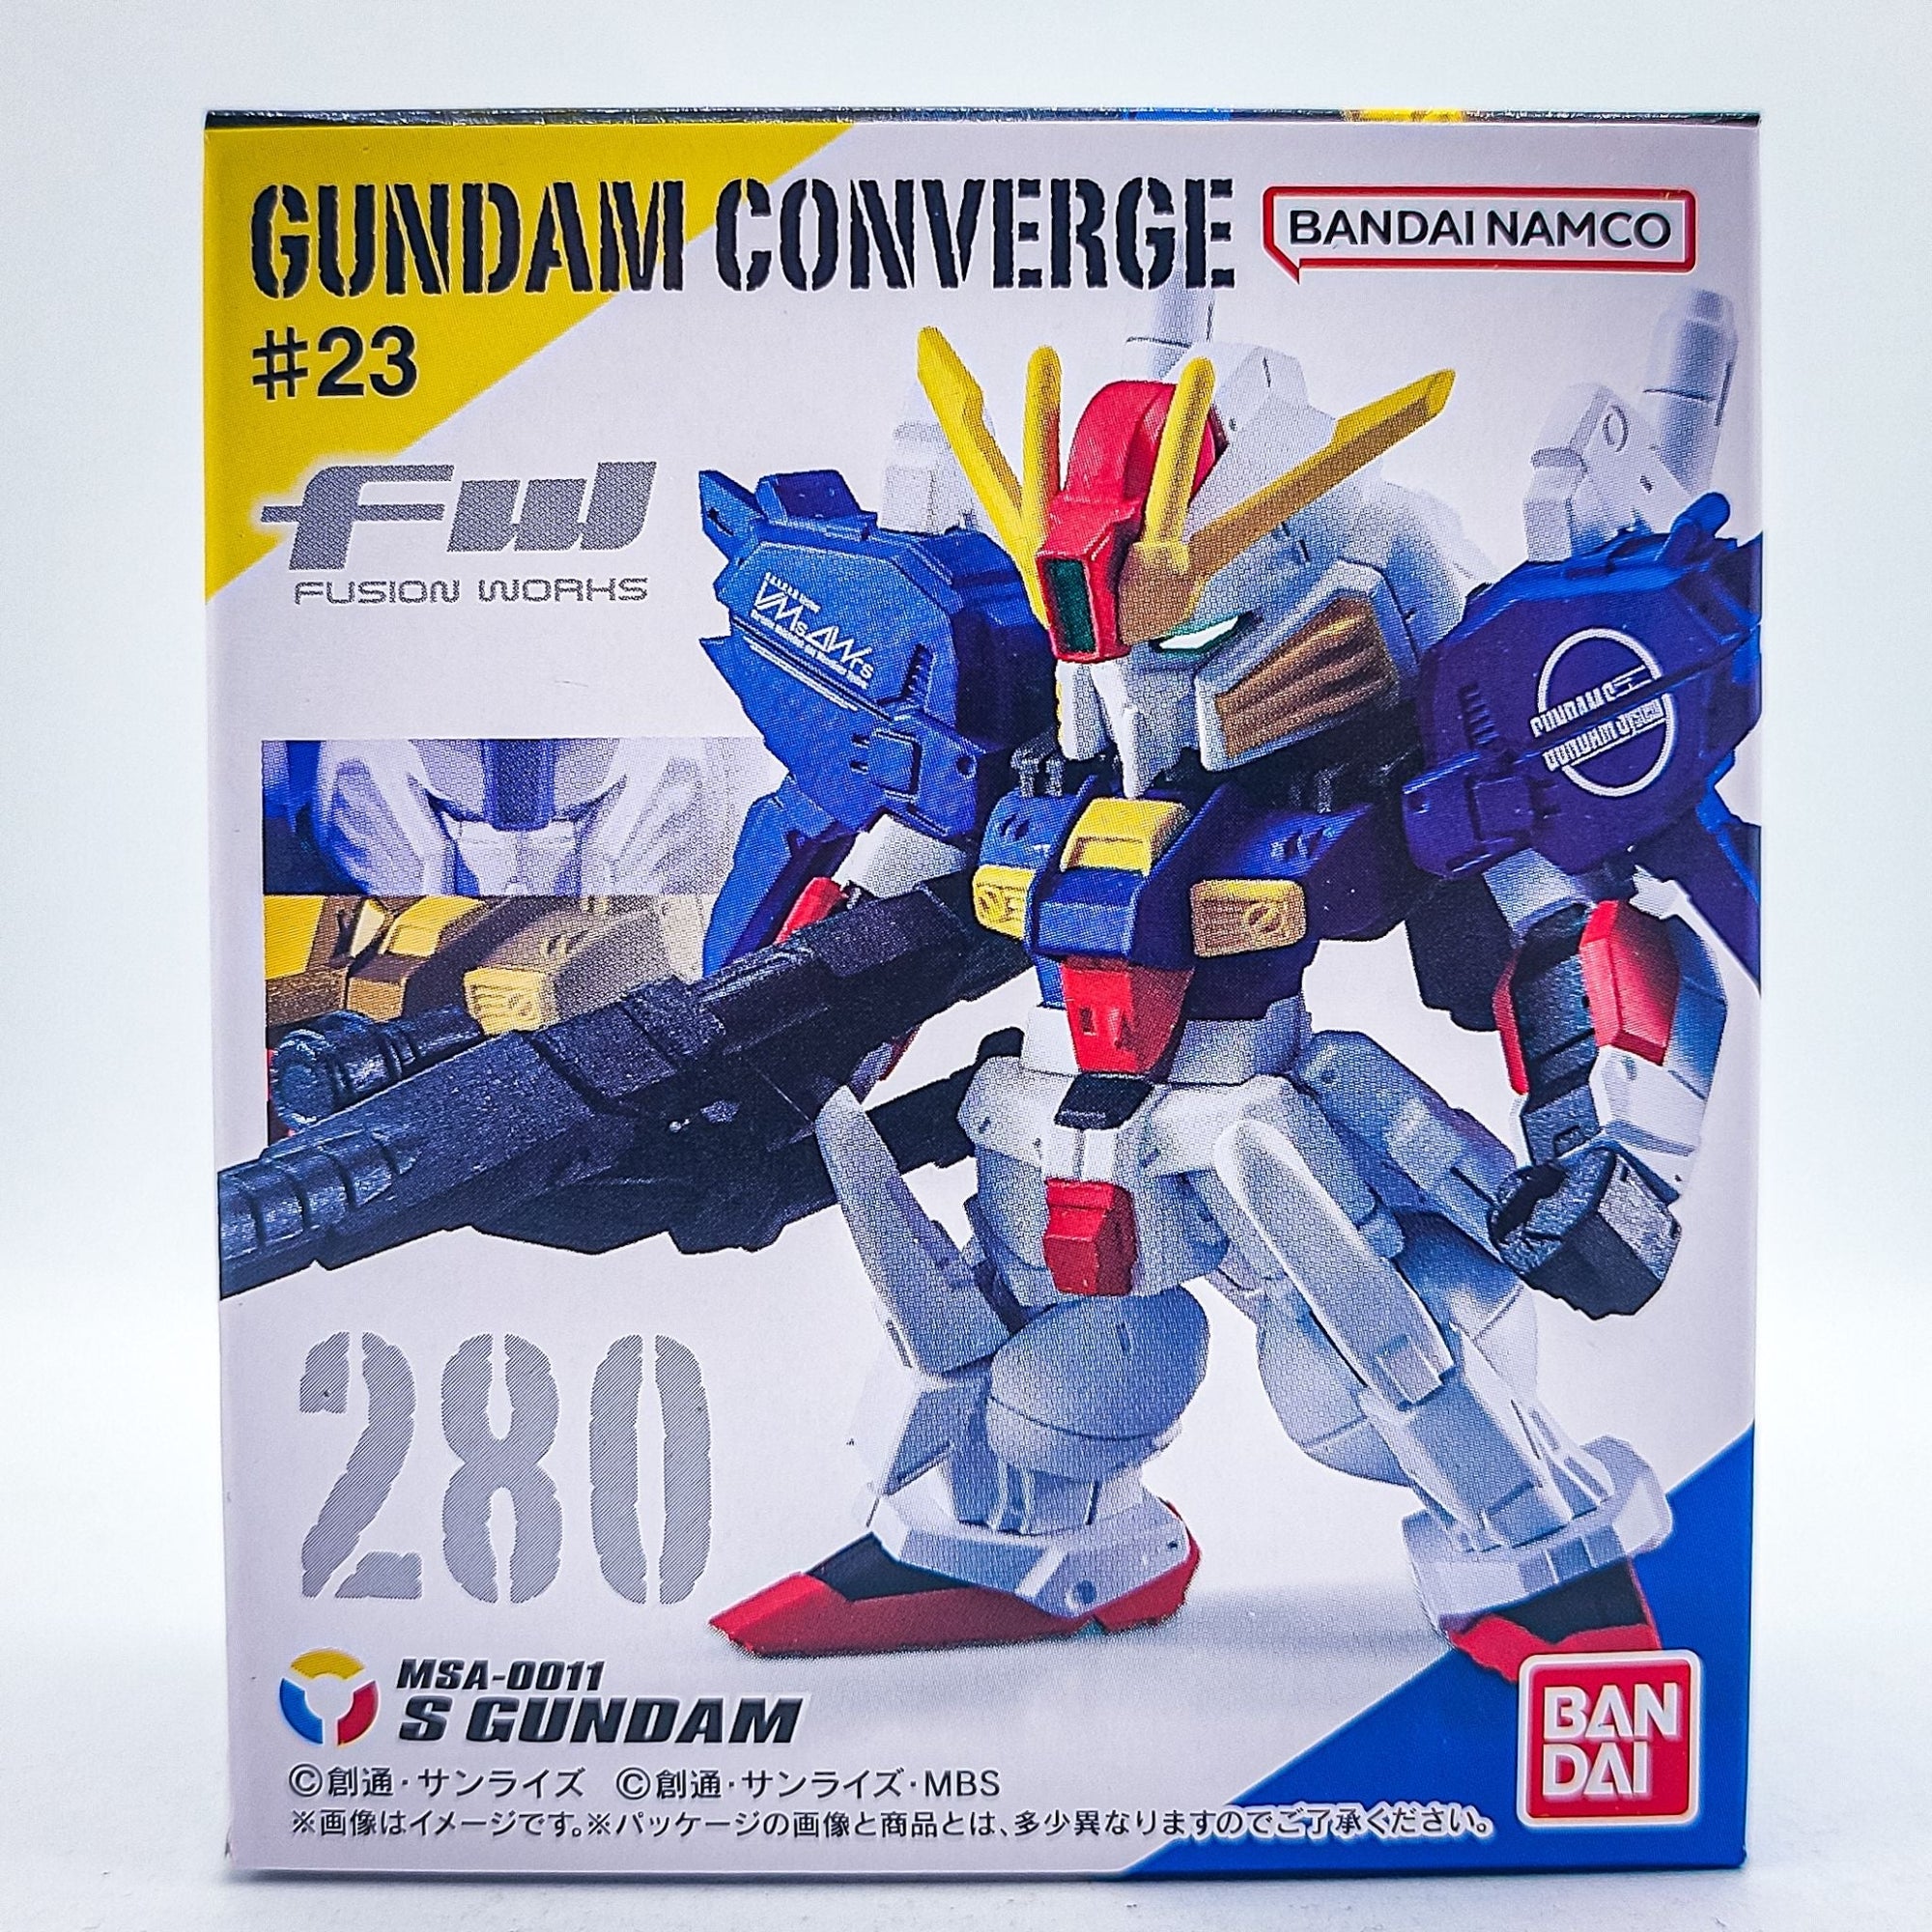 Gundam Converge #280 S Gundam by Bandai - 1